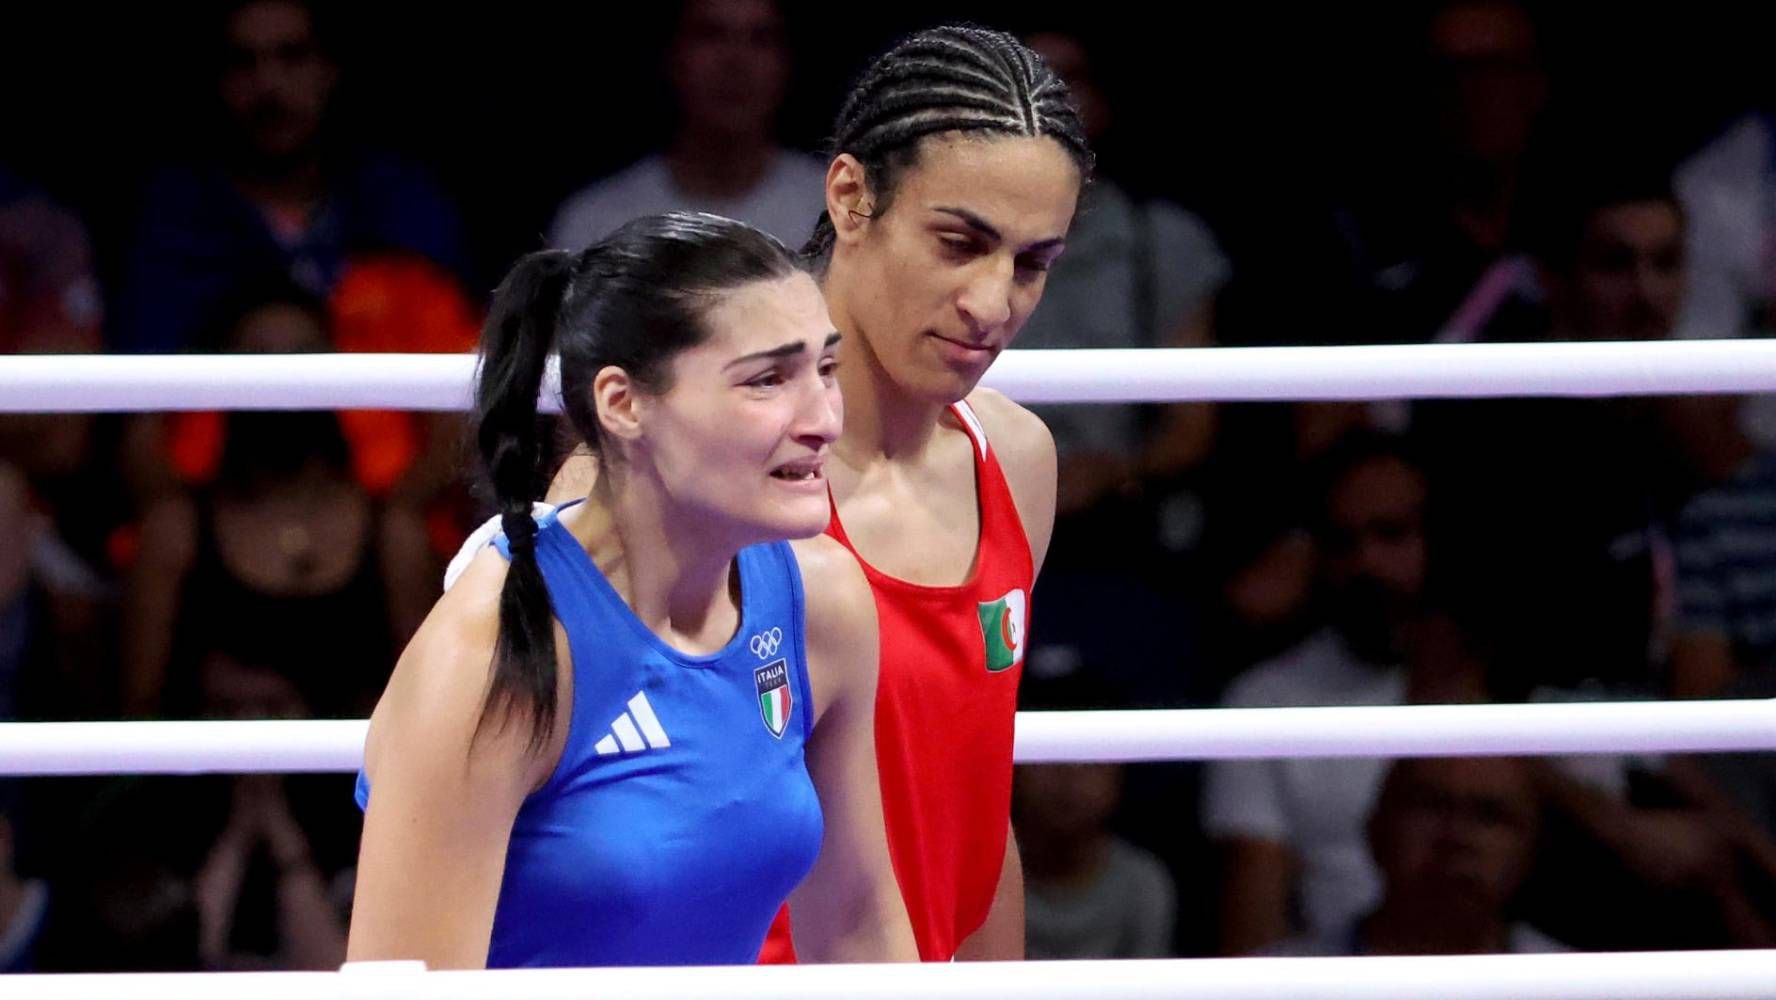 Angela Carini reacciona a derrota ante Imane Khelif en 46s: ‘Me rompe el corazón, era mejor no seguir’